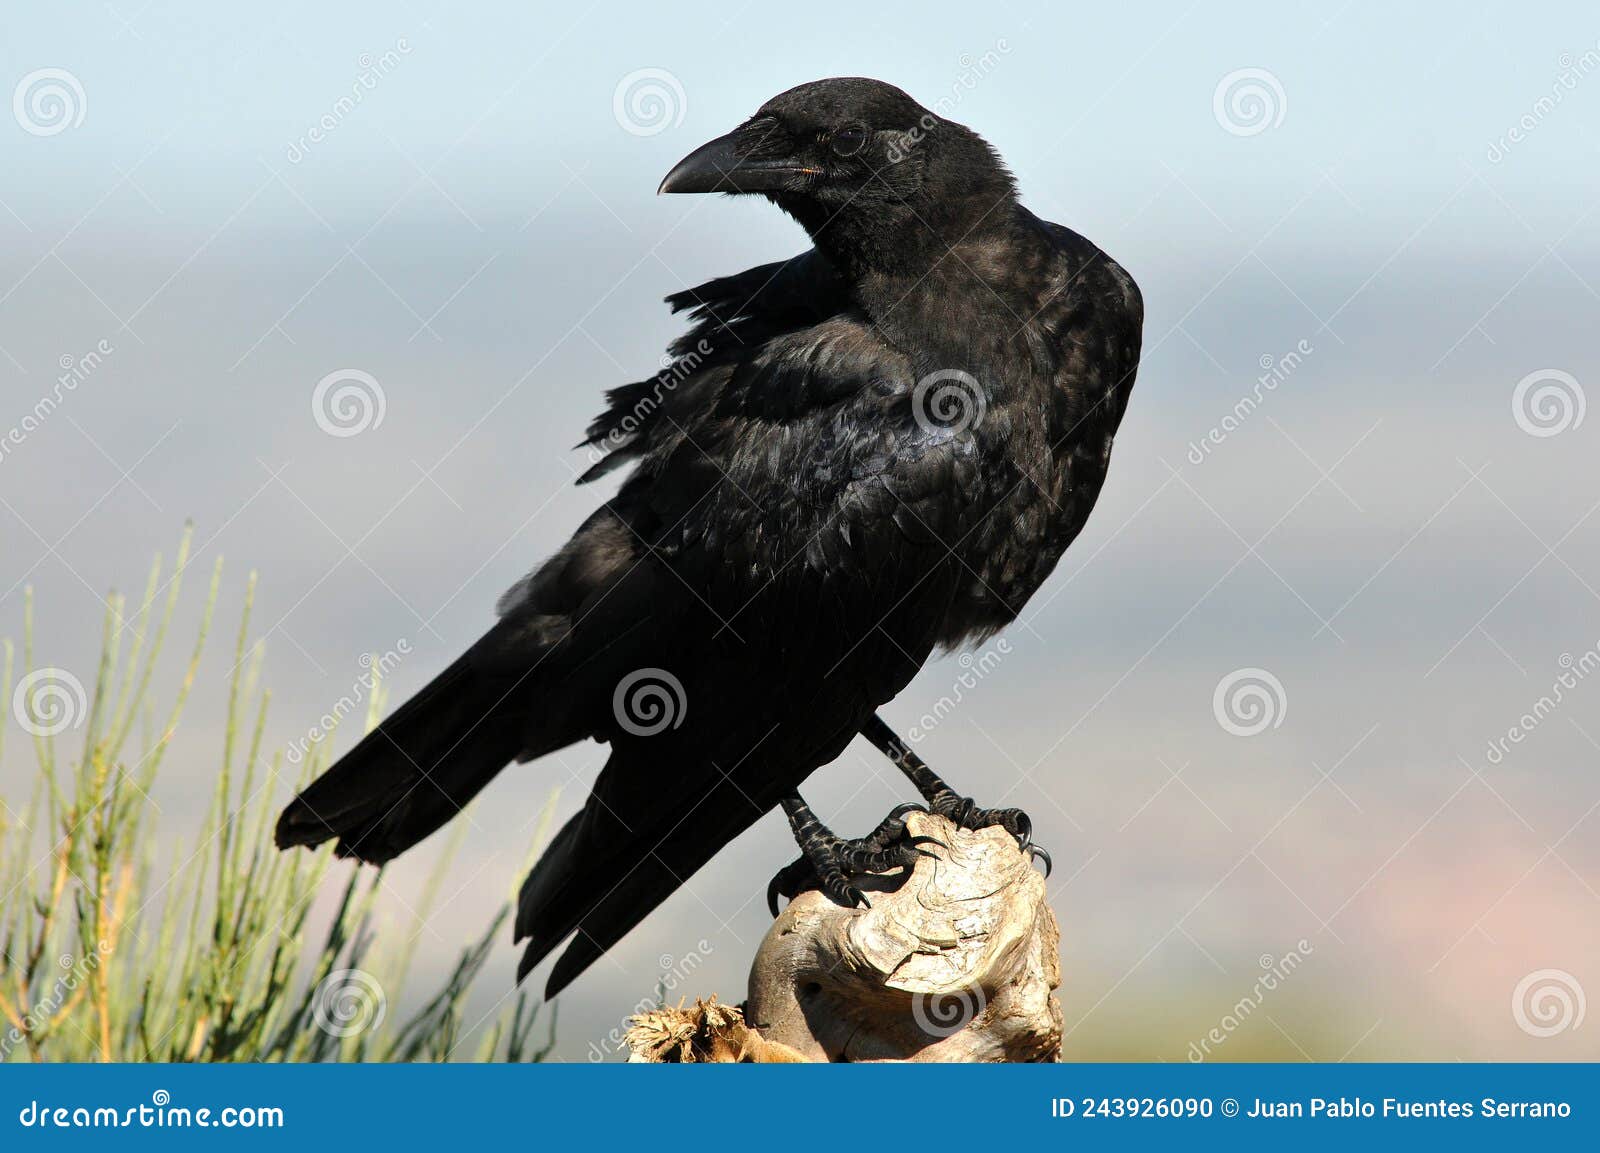 raven grooms its plumage